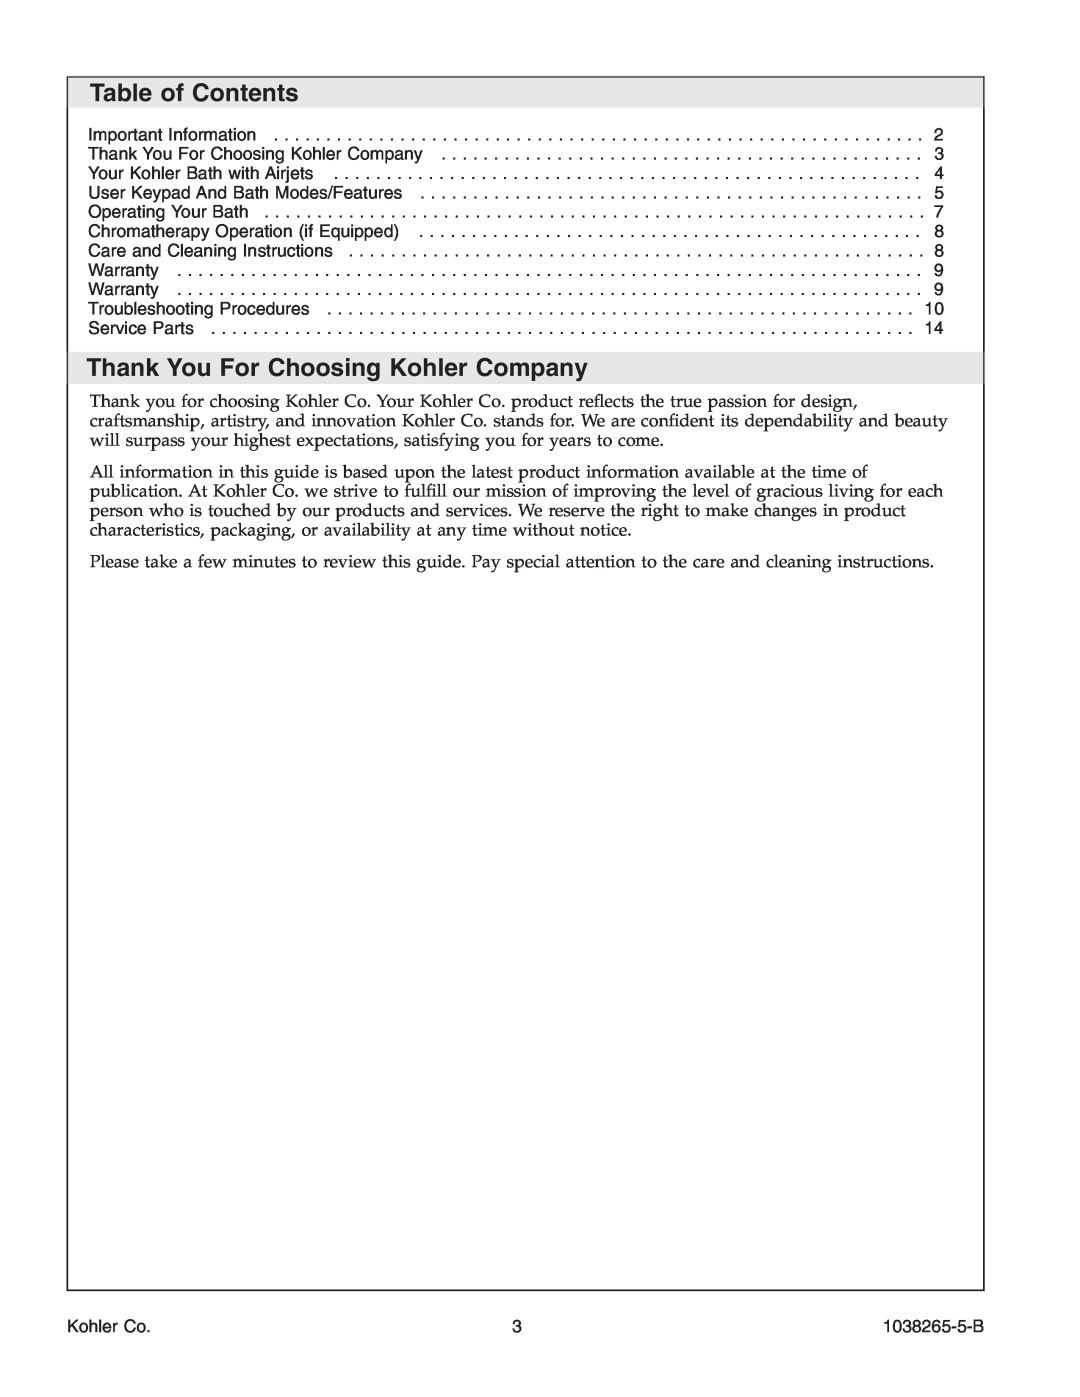 Kohler K-1375 manual Table of Contents, Thank You For Choosing Kohler Company 